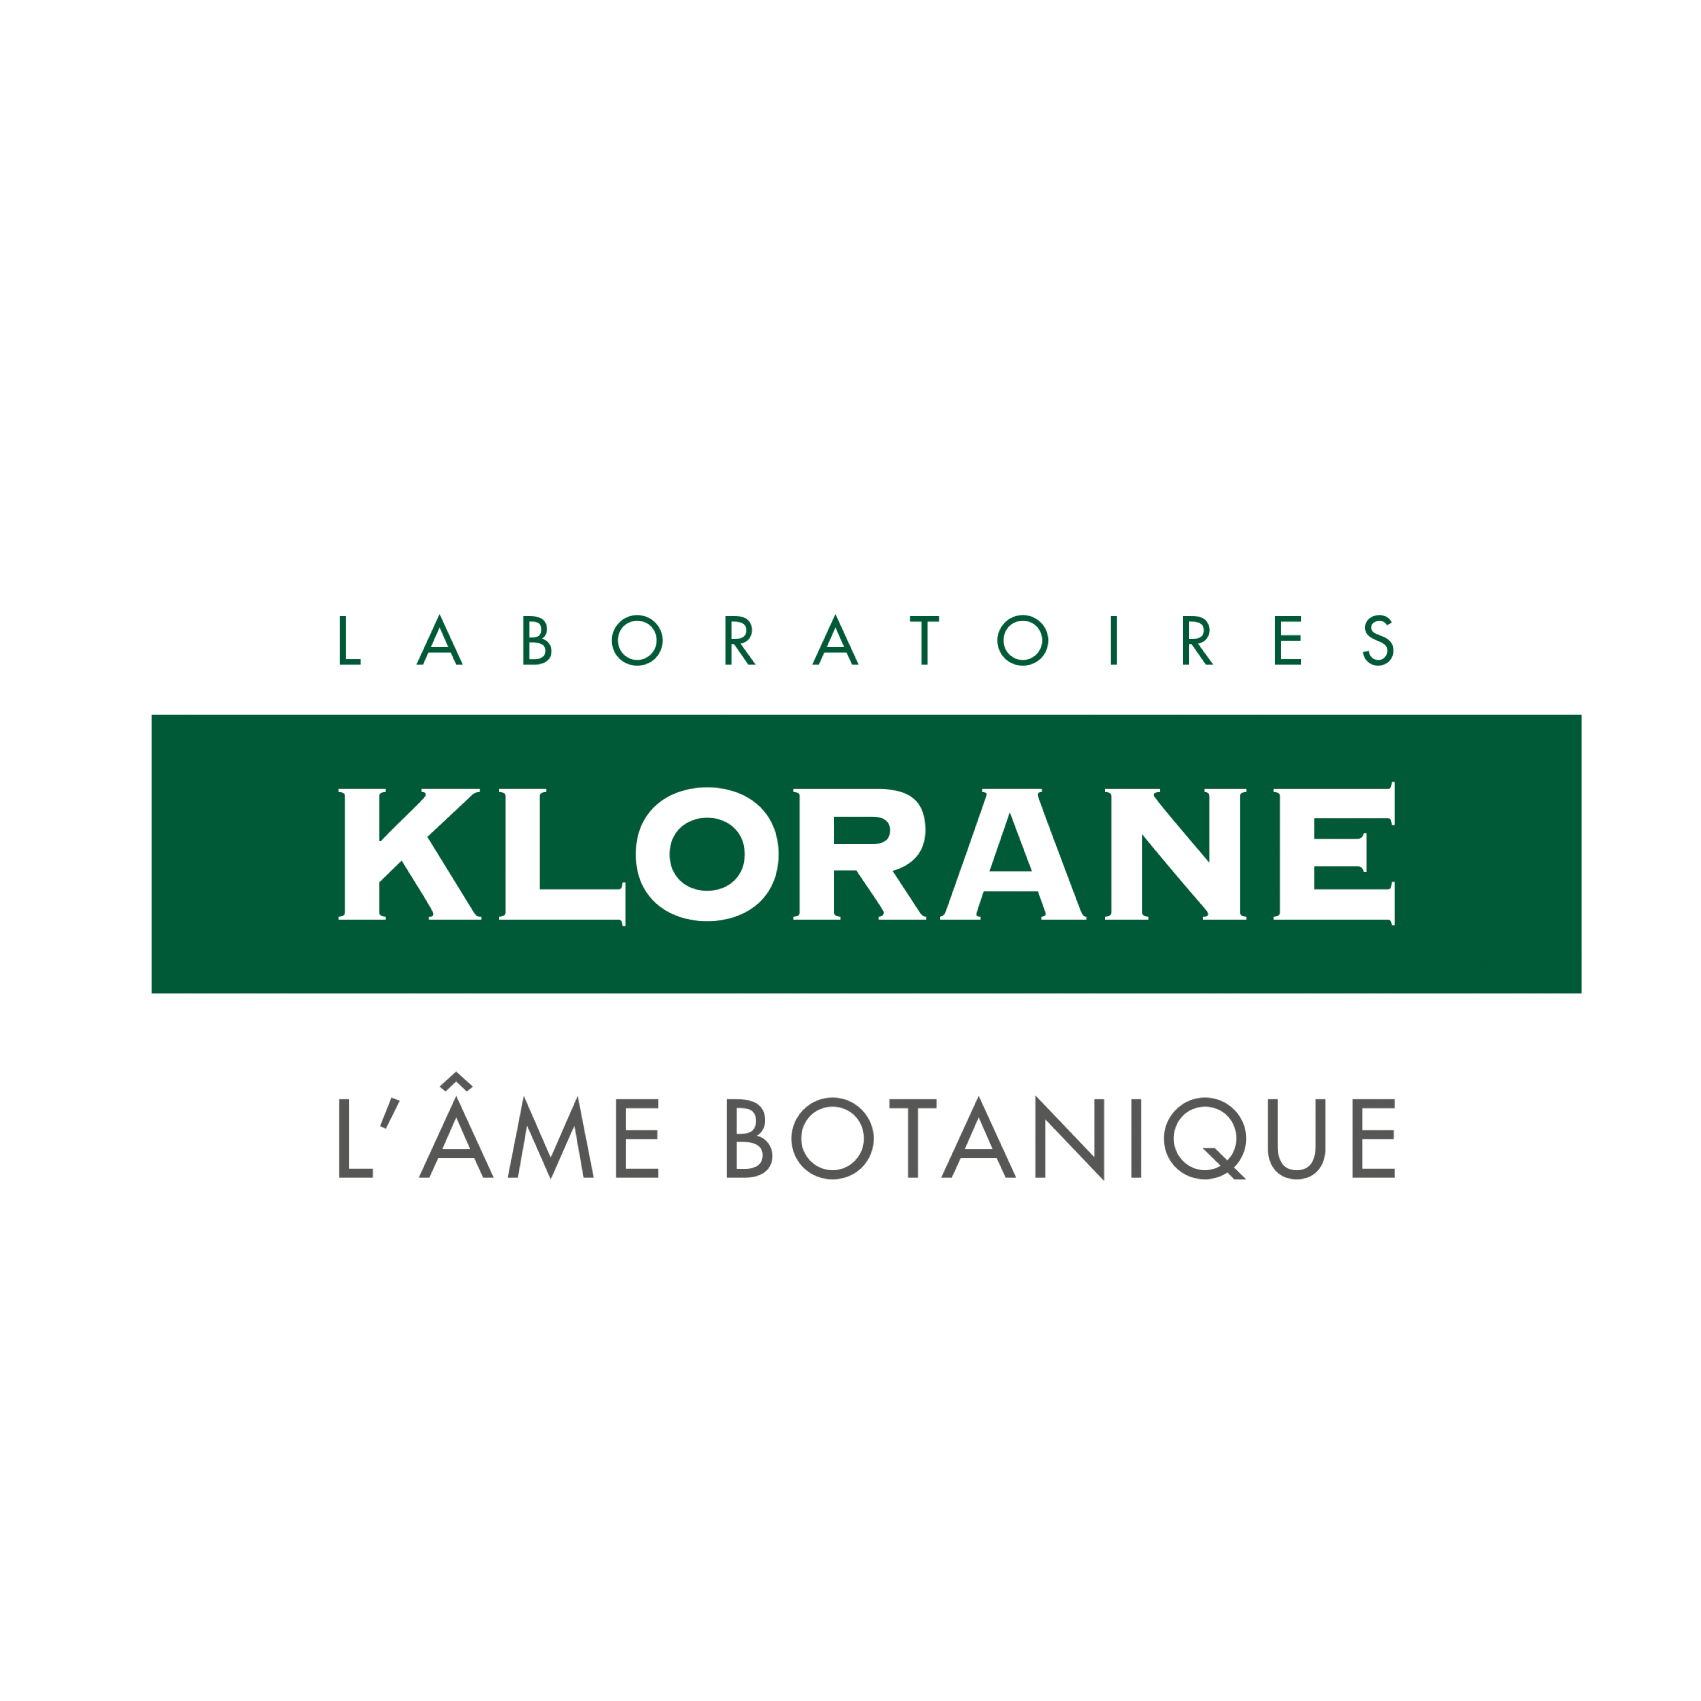 Klorane-logo-carr_C3_A9